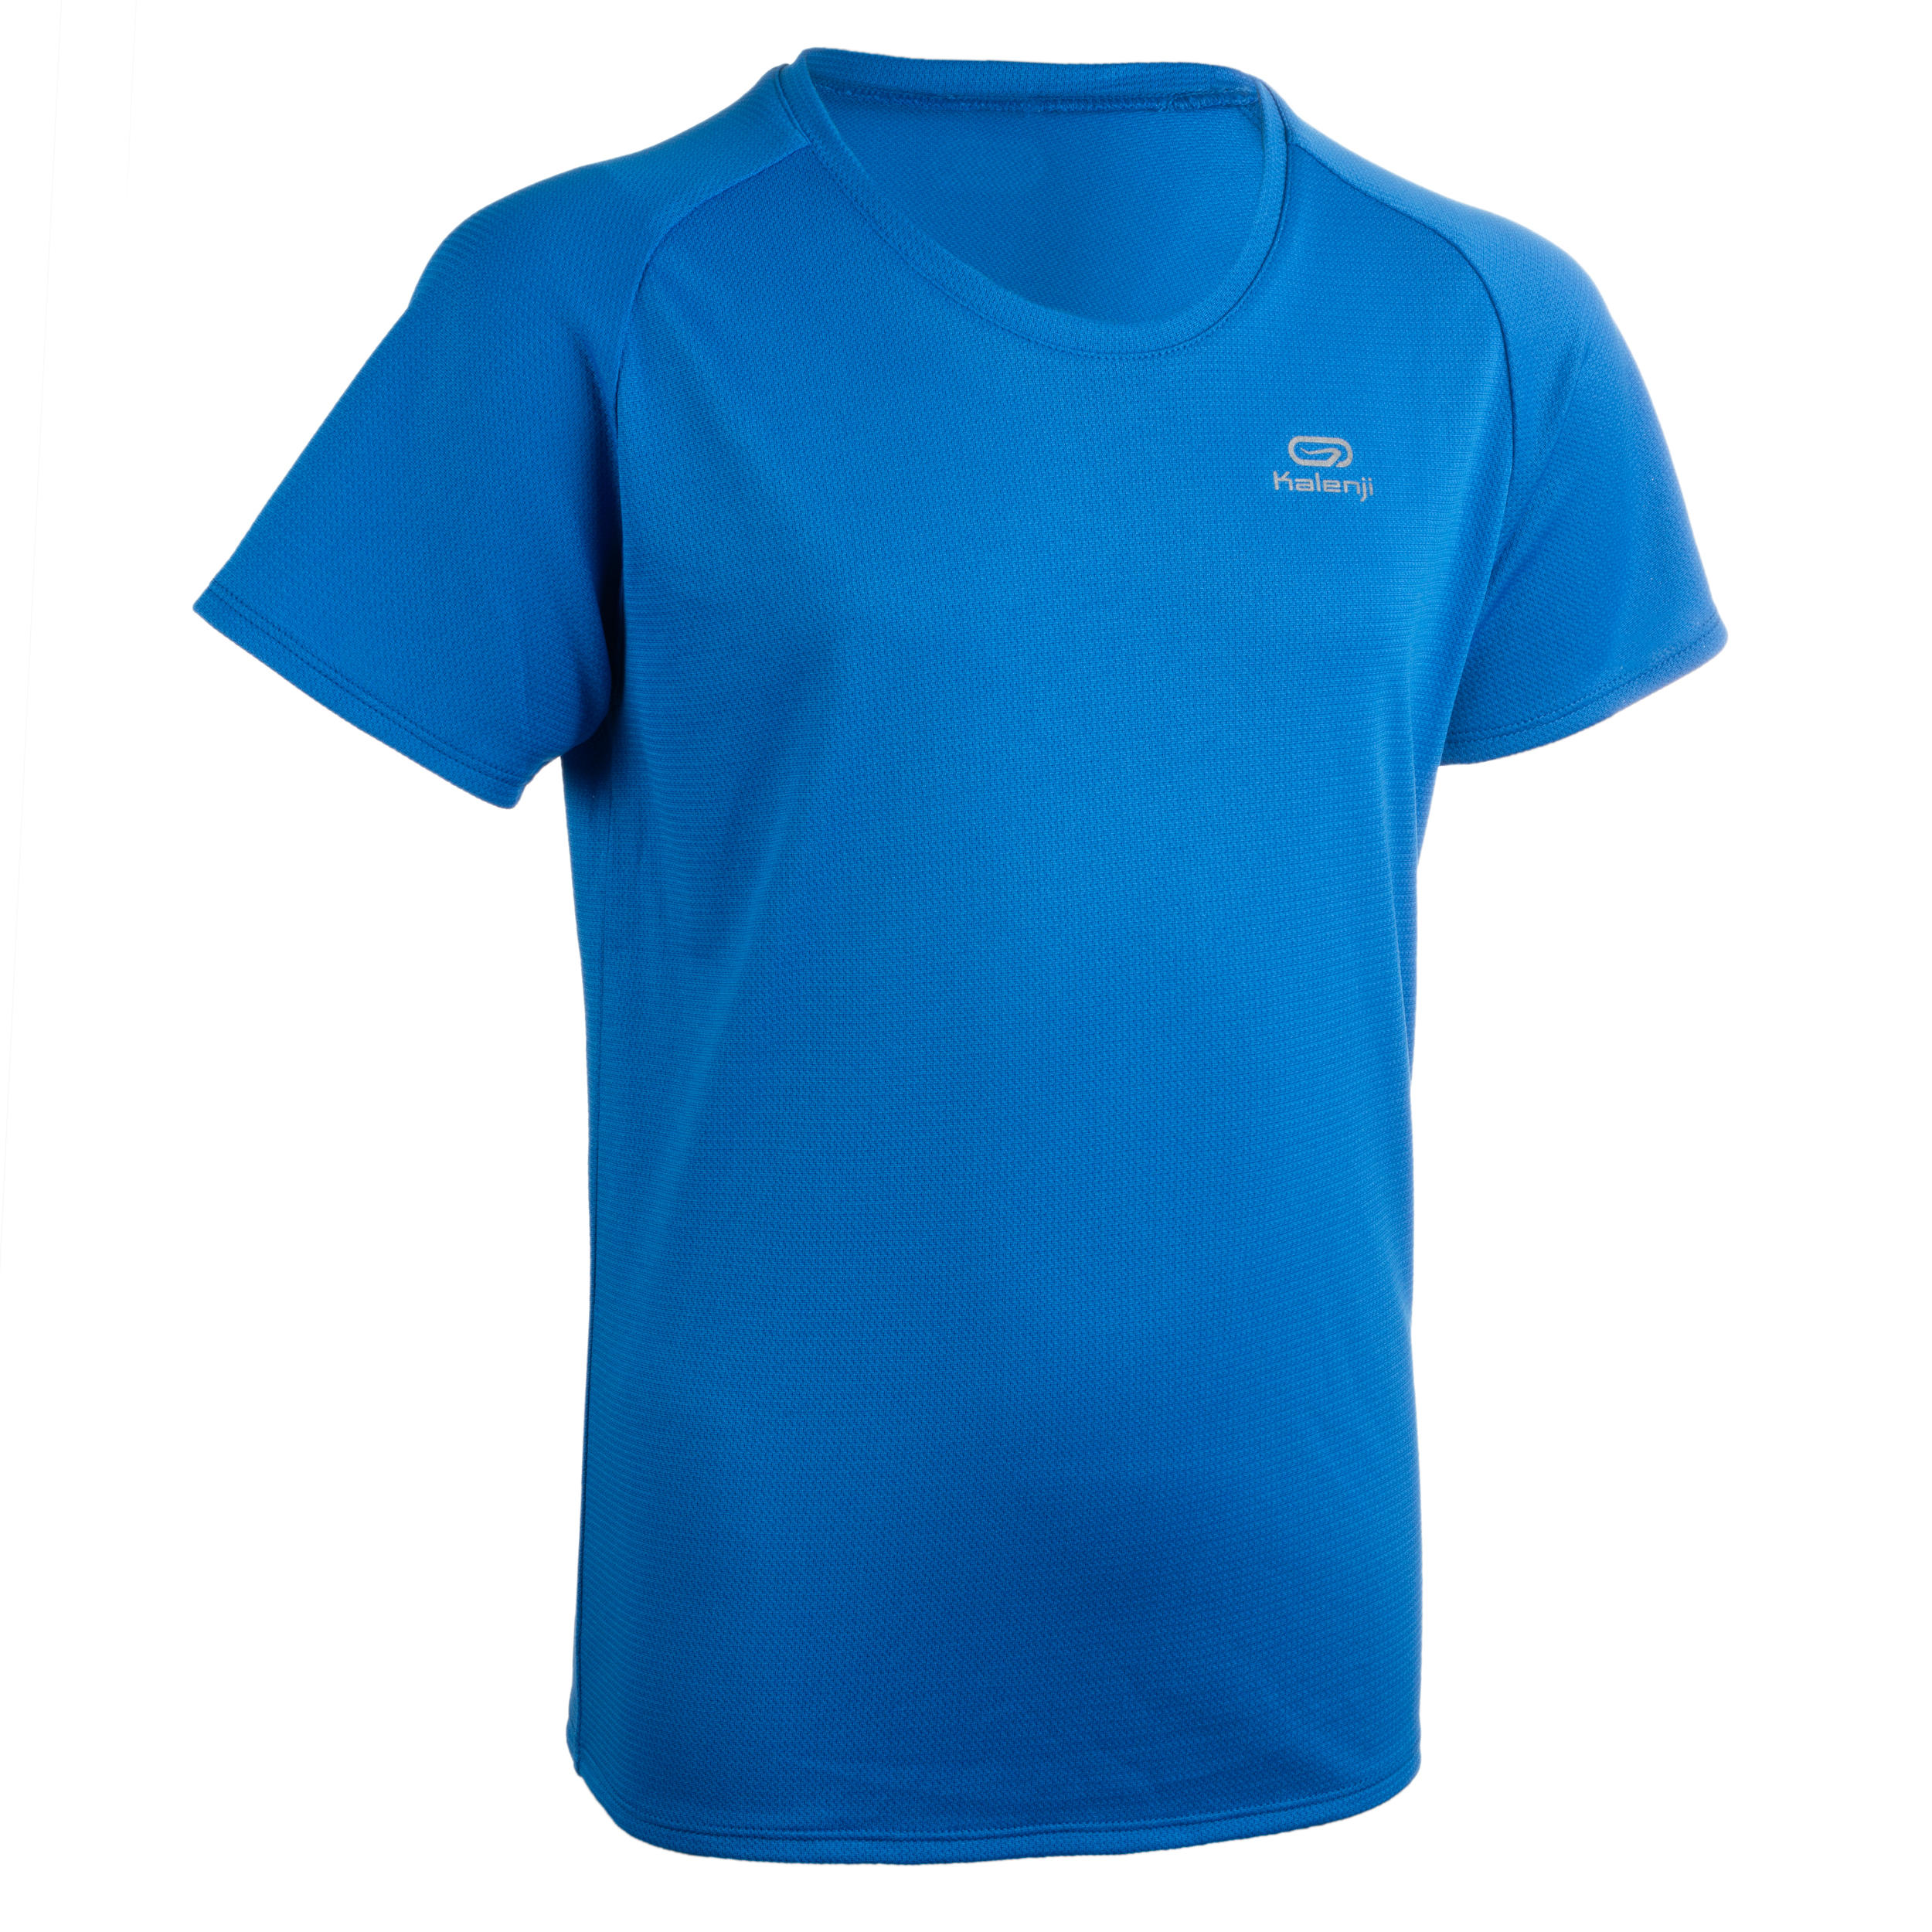 Blu/Blu navy 8A MODA BAMBINI Camicie & T-shirt Sportivo Decathlon T-shirt sconto 93% 